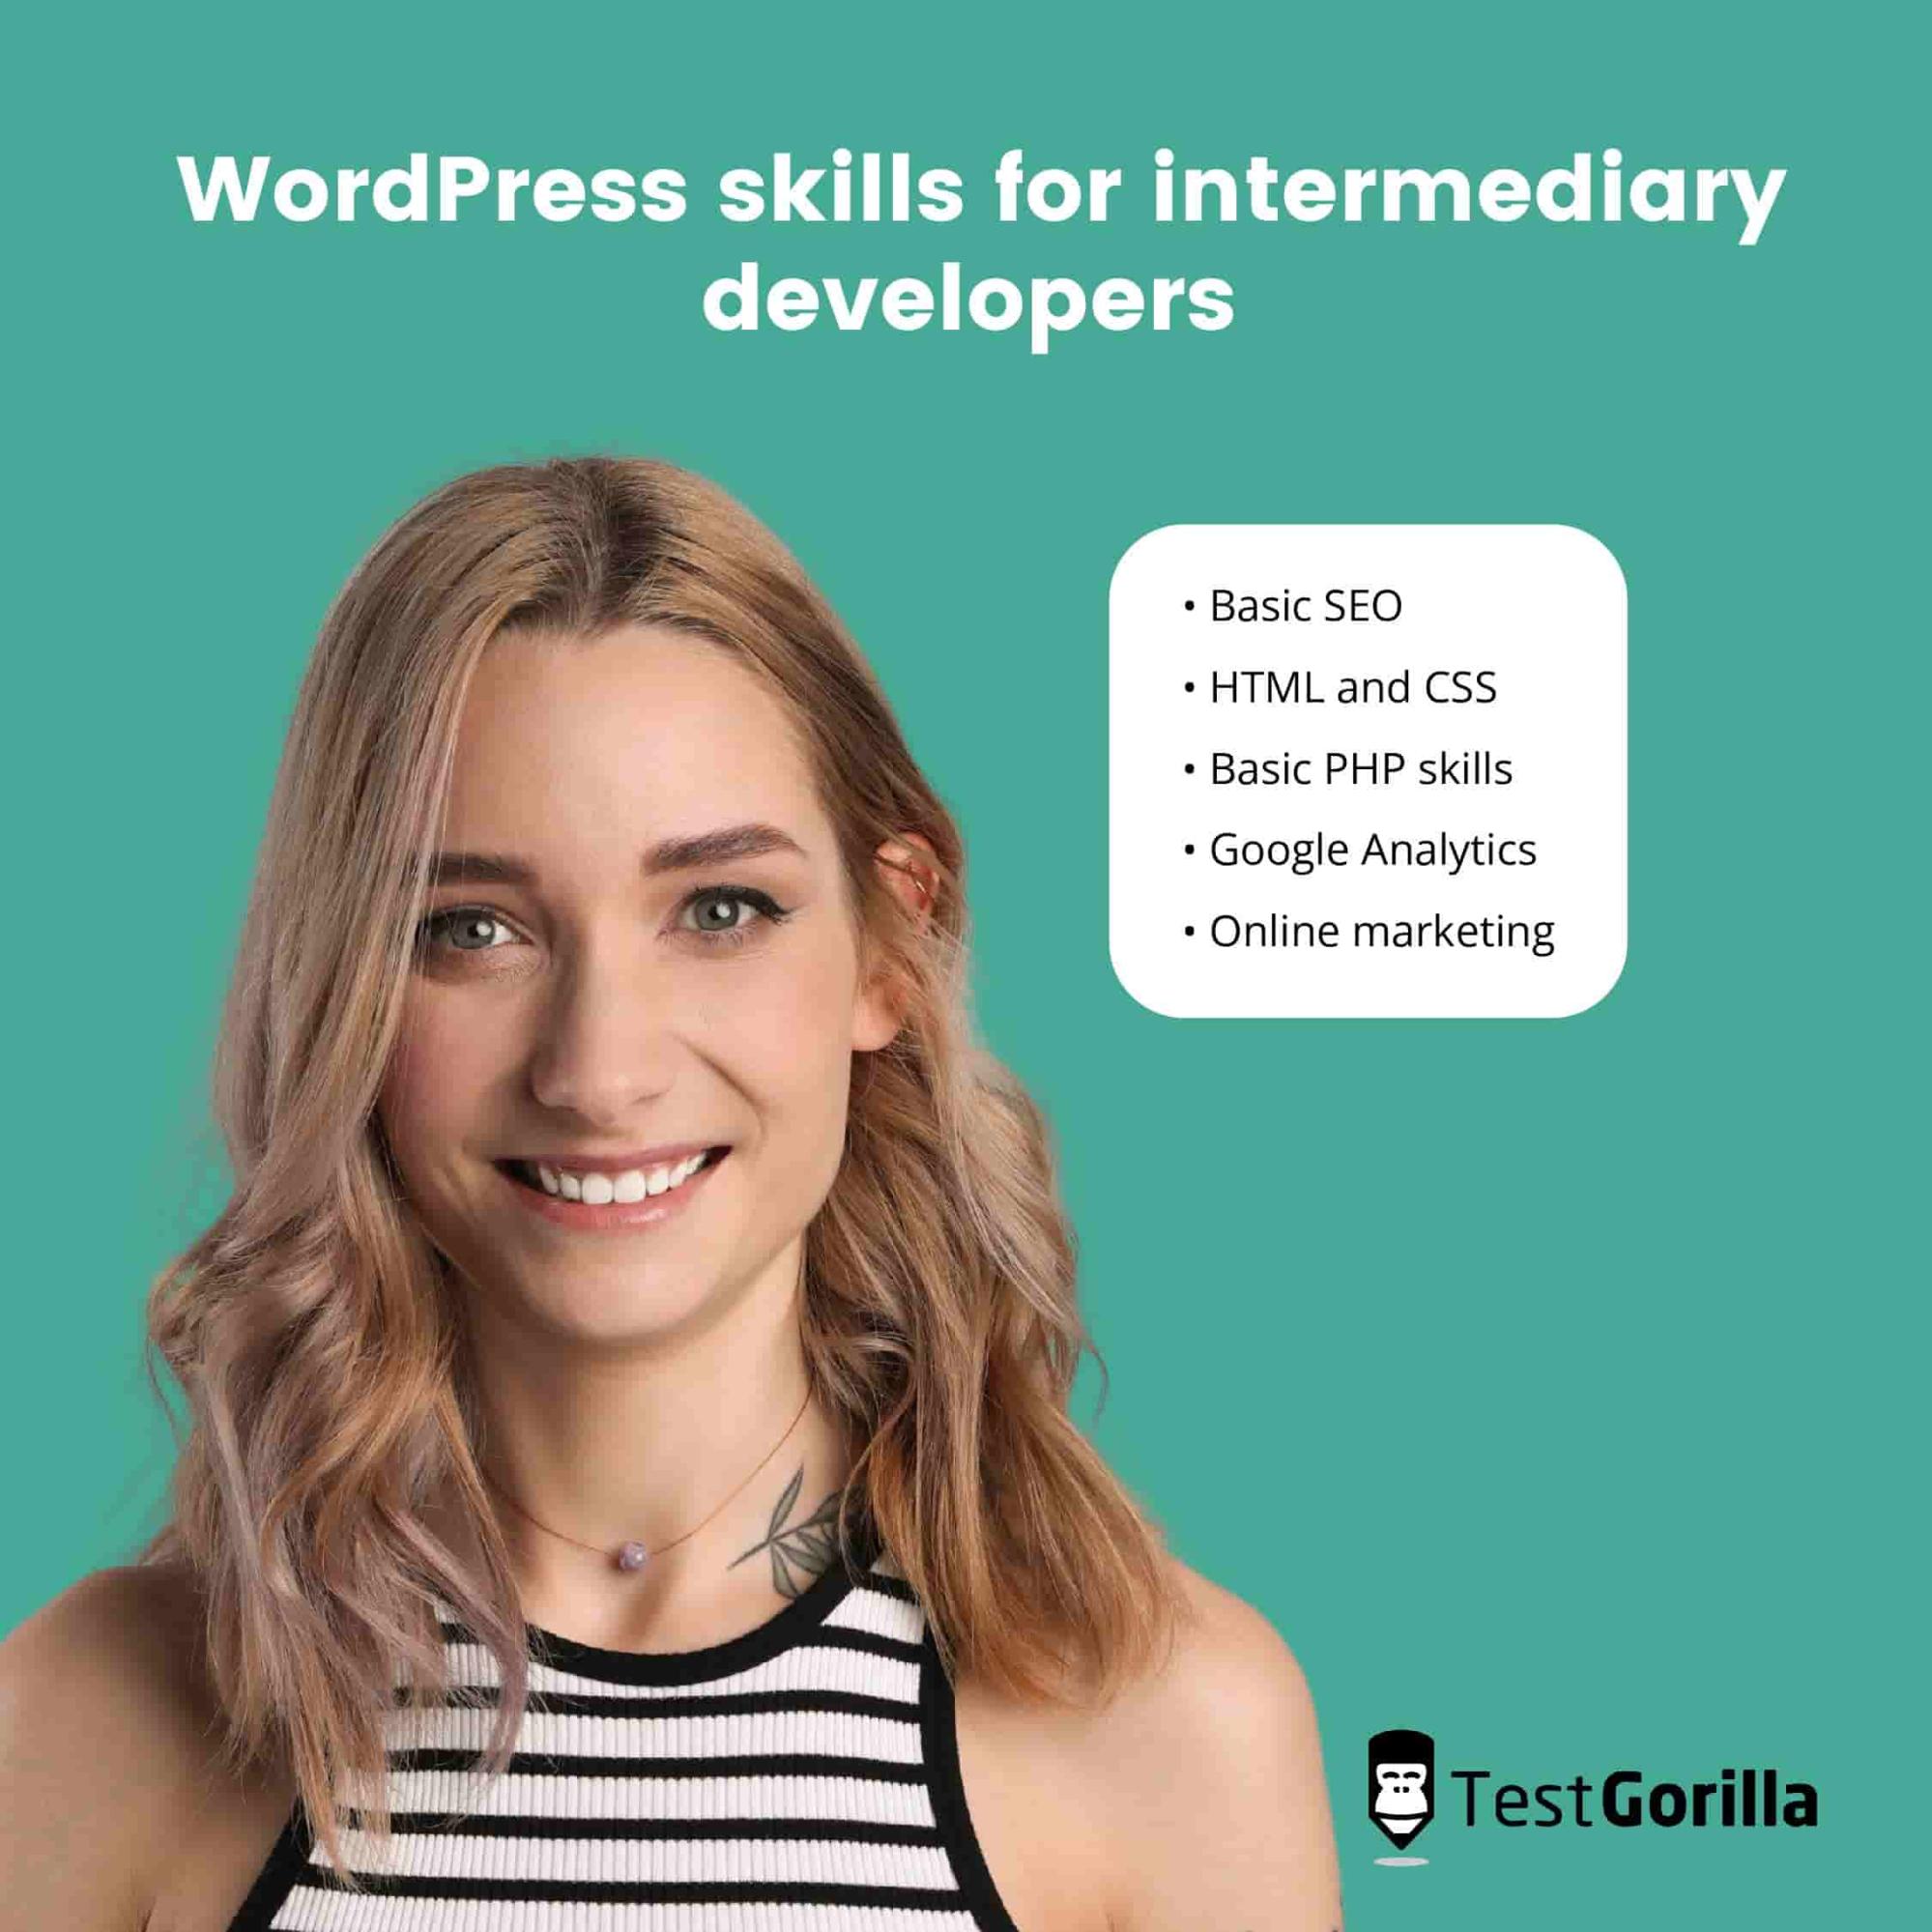 WordPress skills for intermediary developers